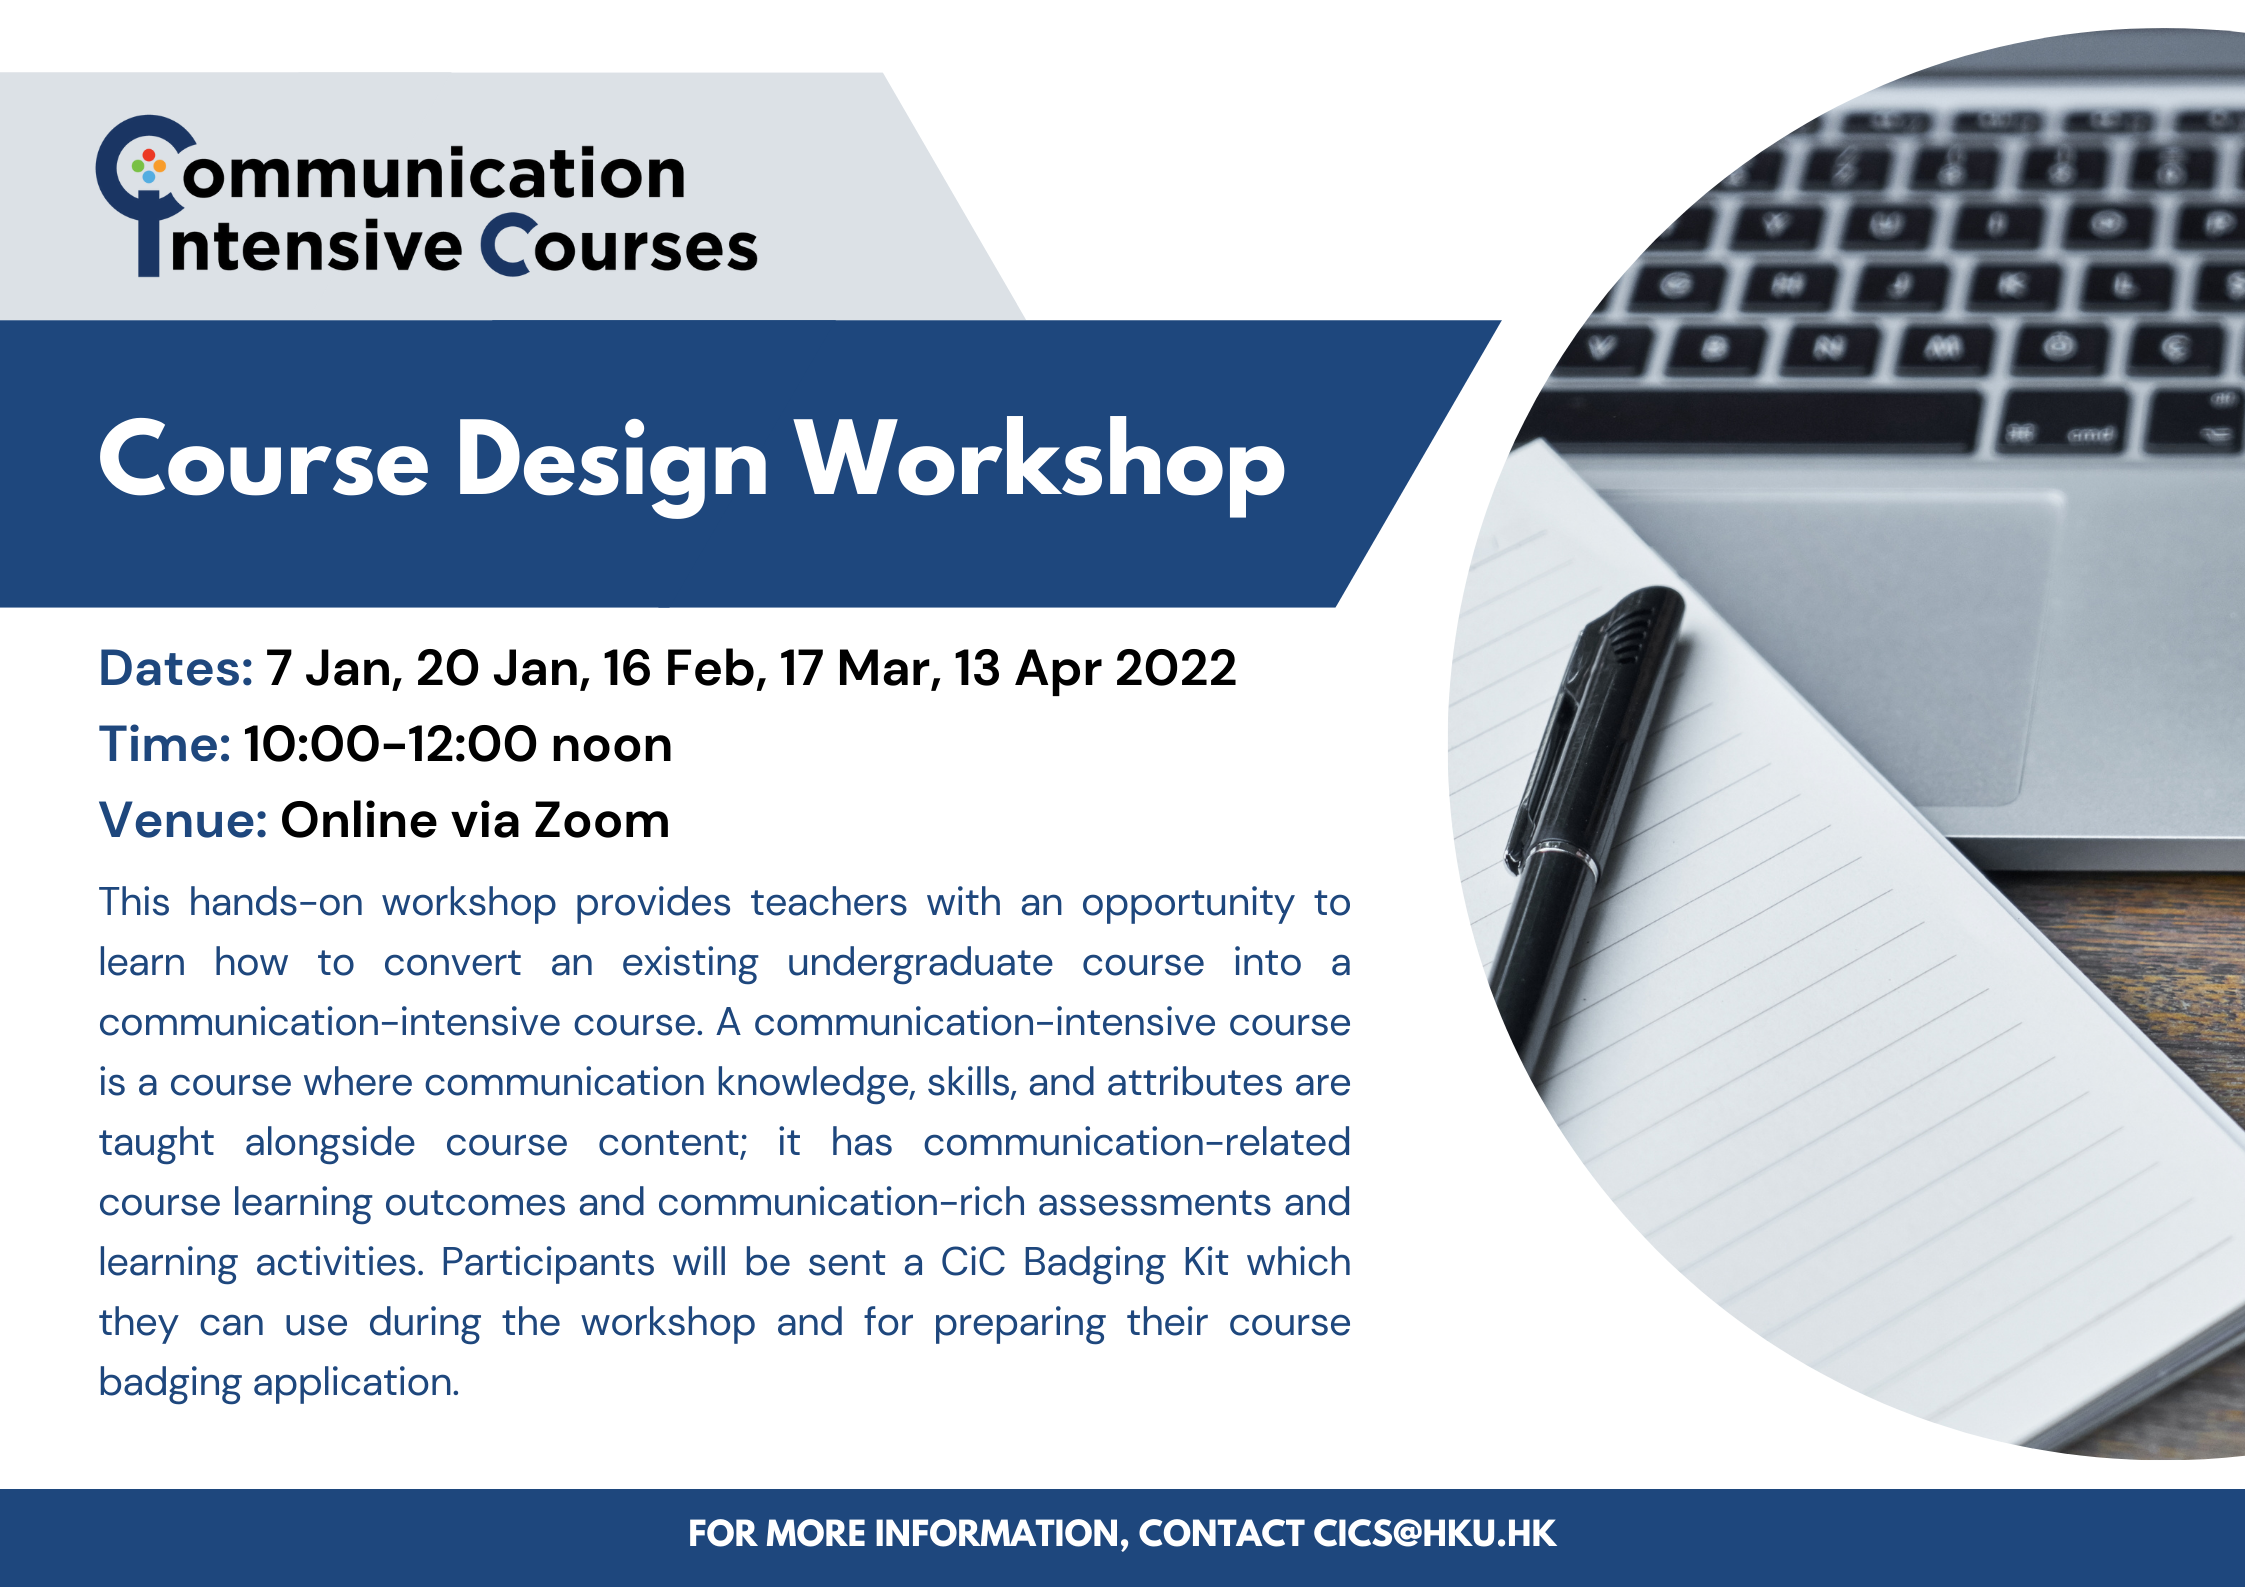 Course Design Workshop